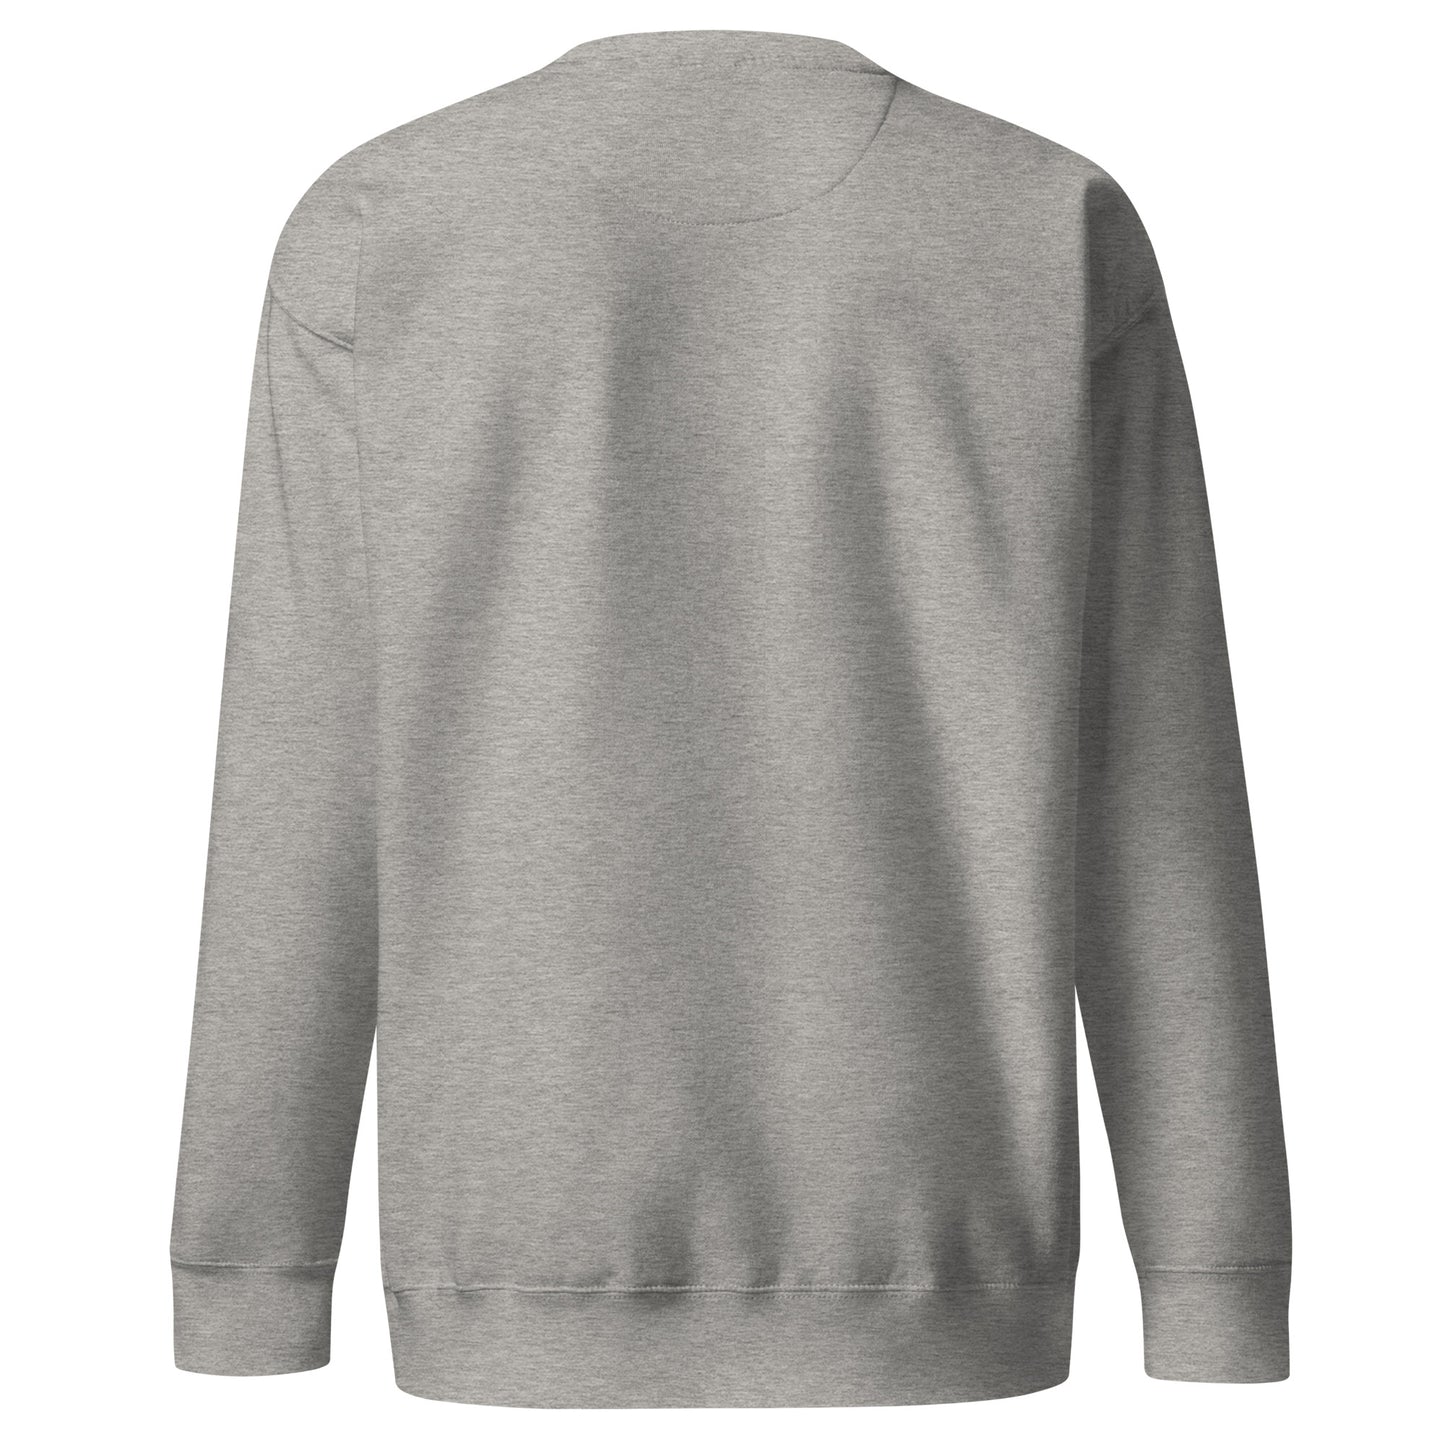 Coffee Mellow - Unisex Premium Sweatshirt